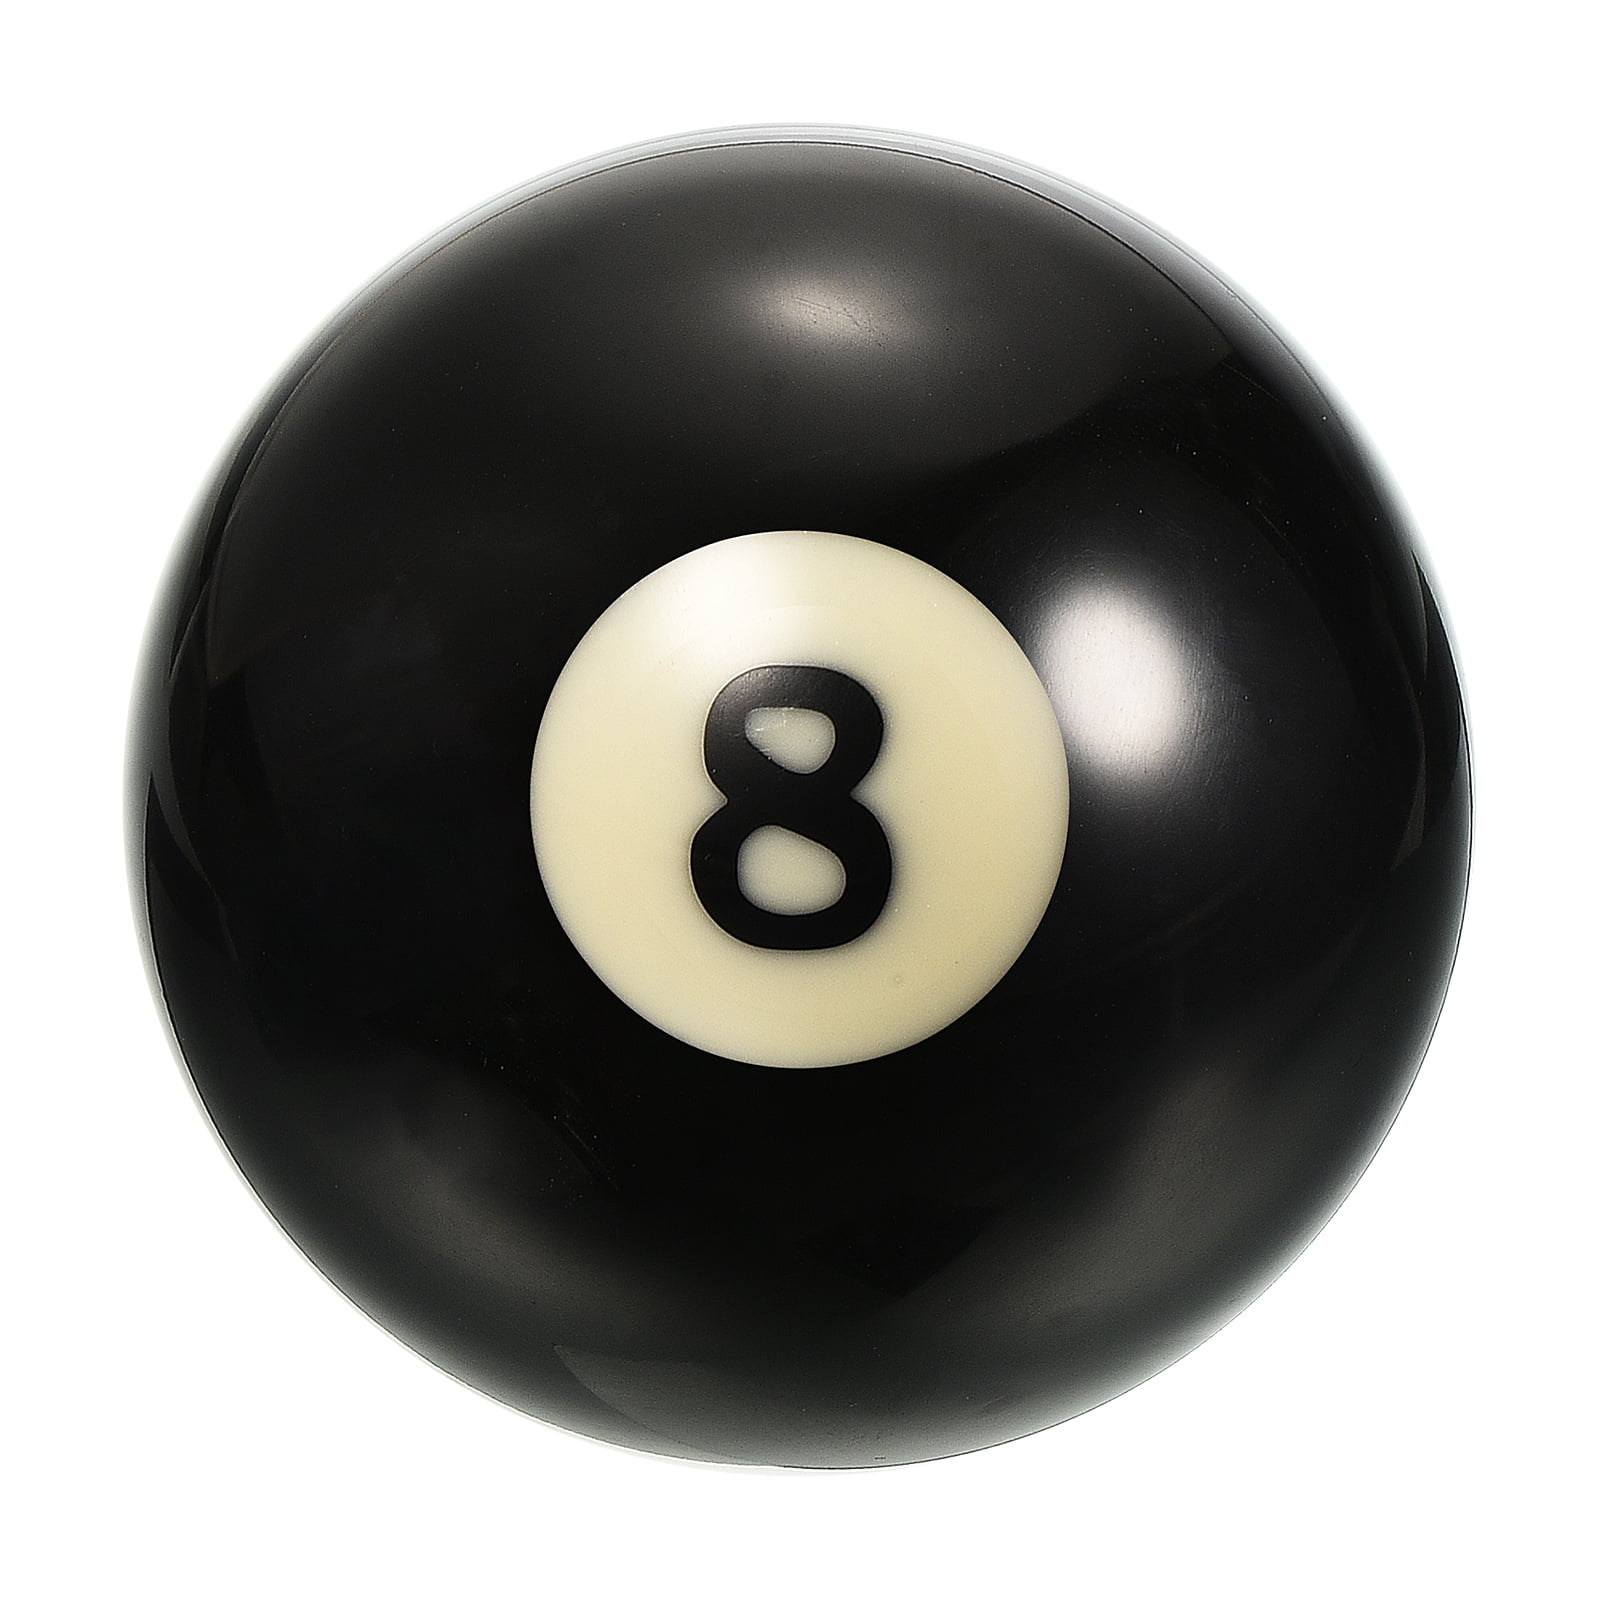 Uxcell 2 1/4 #8 Ball Billiard Replacement Ball Pool Table Ball Pool Ball,  Black